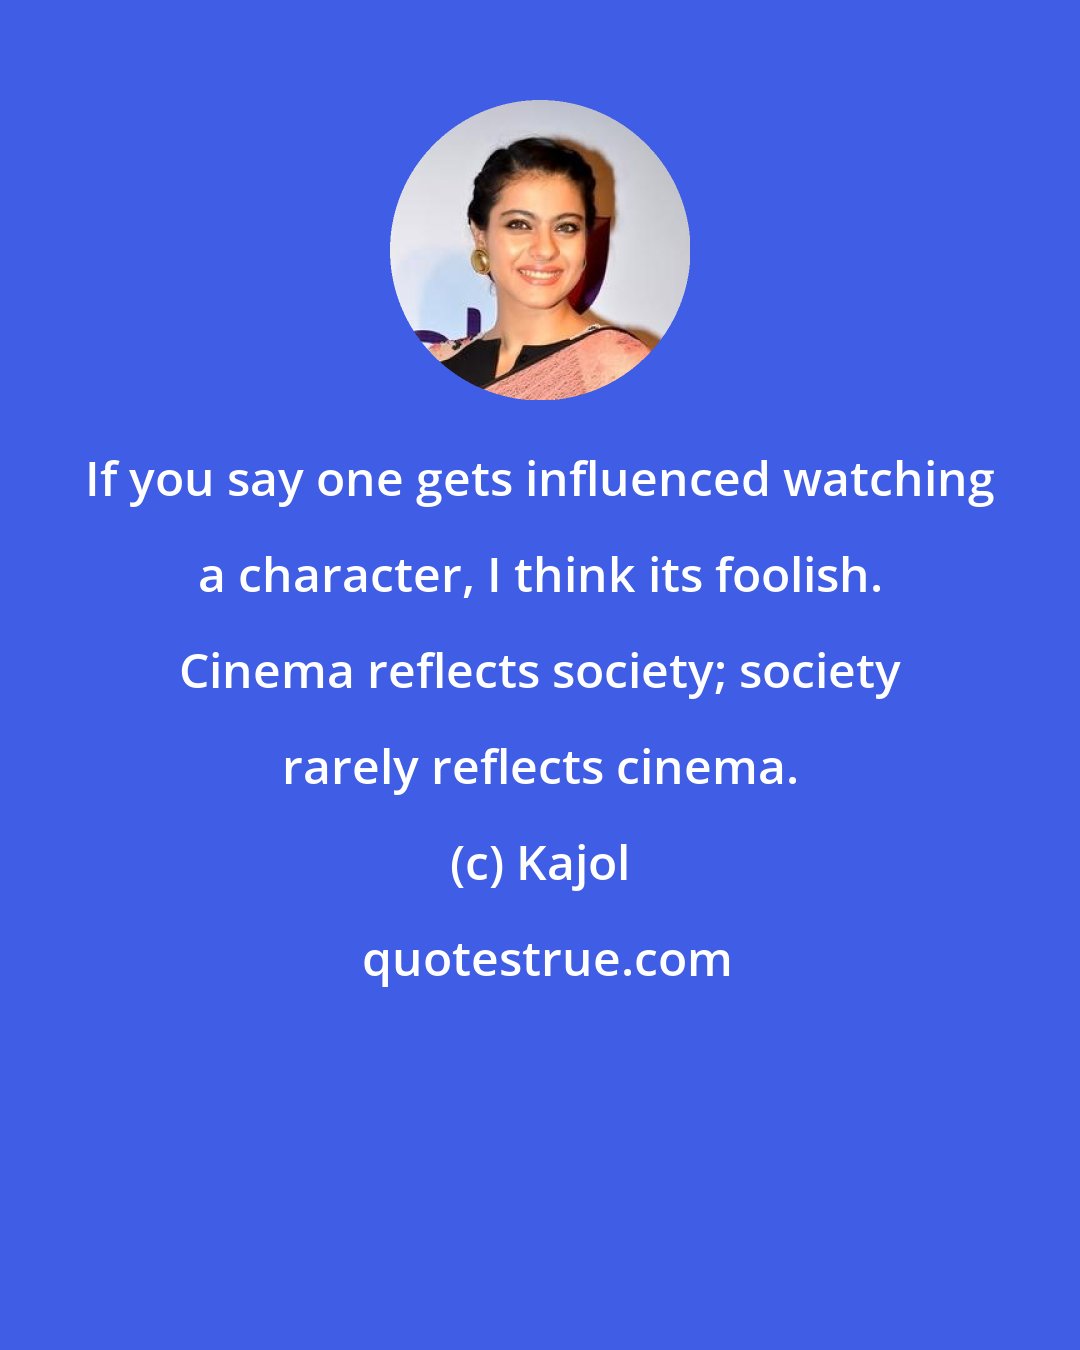 Kajol: If you say one gets influenced watching a character, I think its foolish. Cinema reflects society; society rarely reflects cinema.